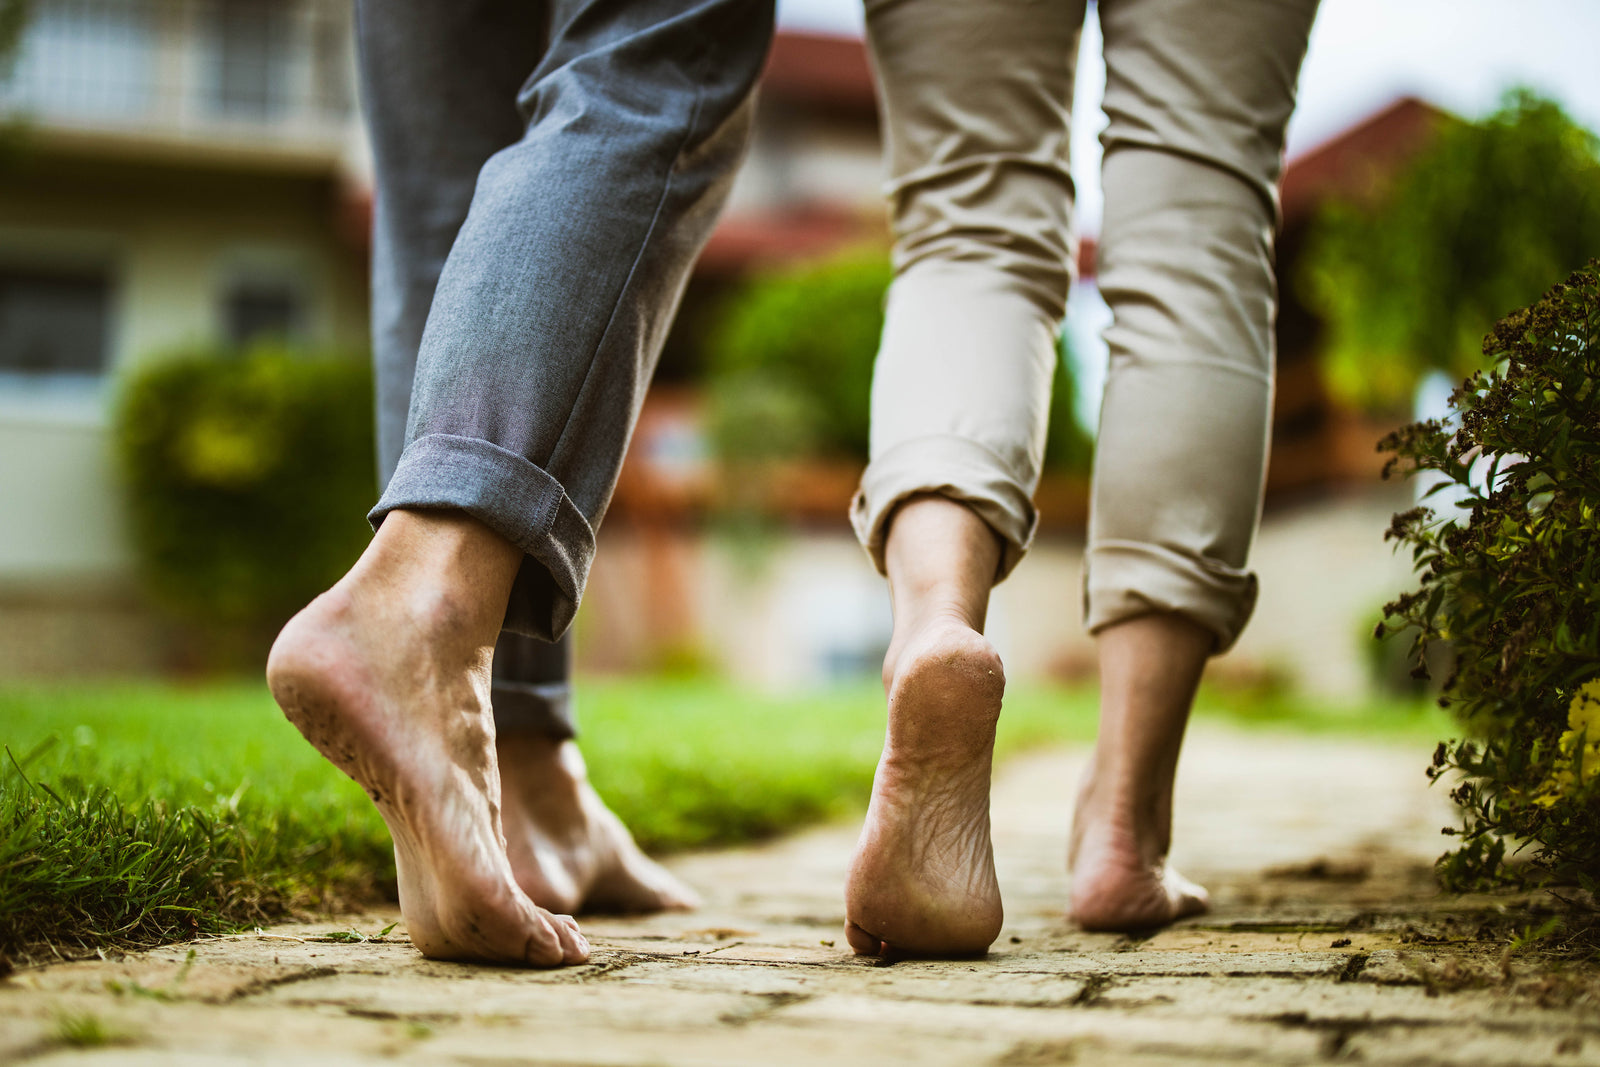 Do you like walking in bare feet? - Quora